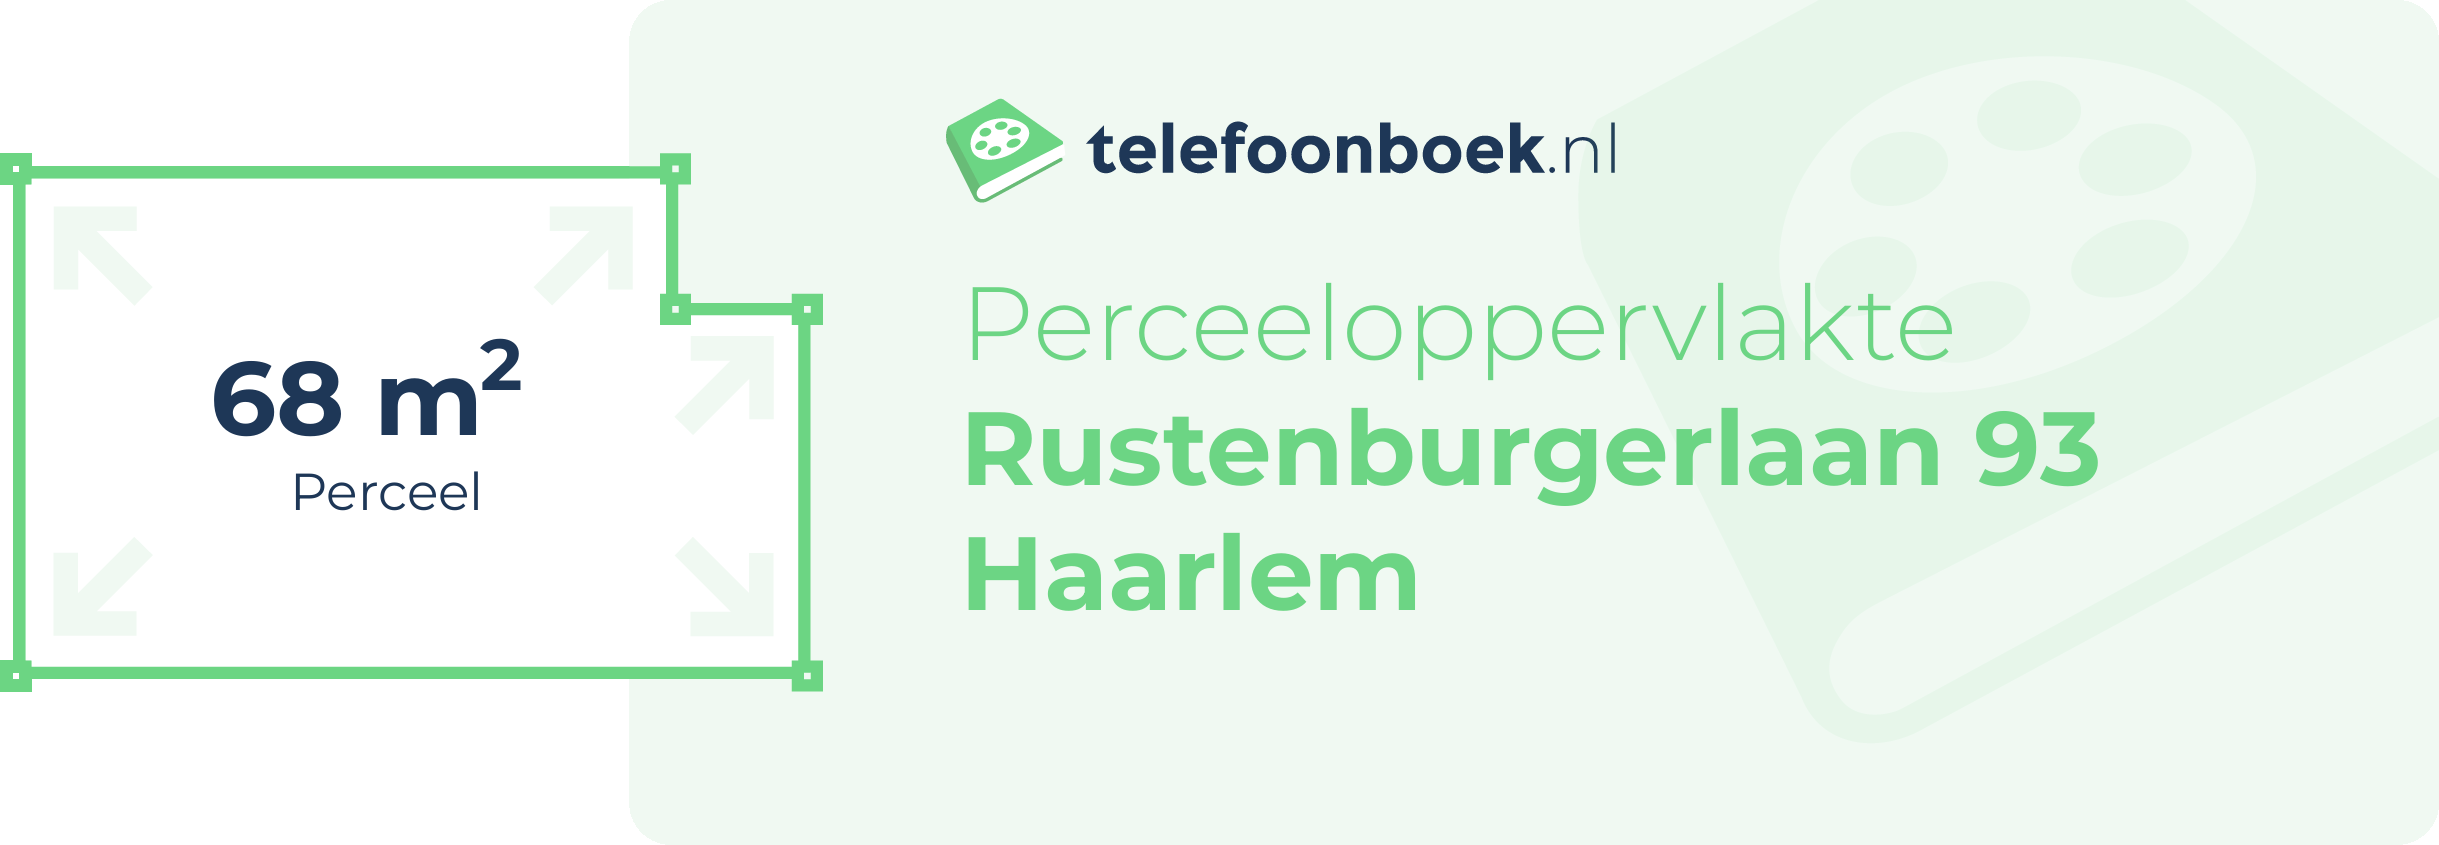 Perceeloppervlakte Rustenburgerlaan 93 Haarlem